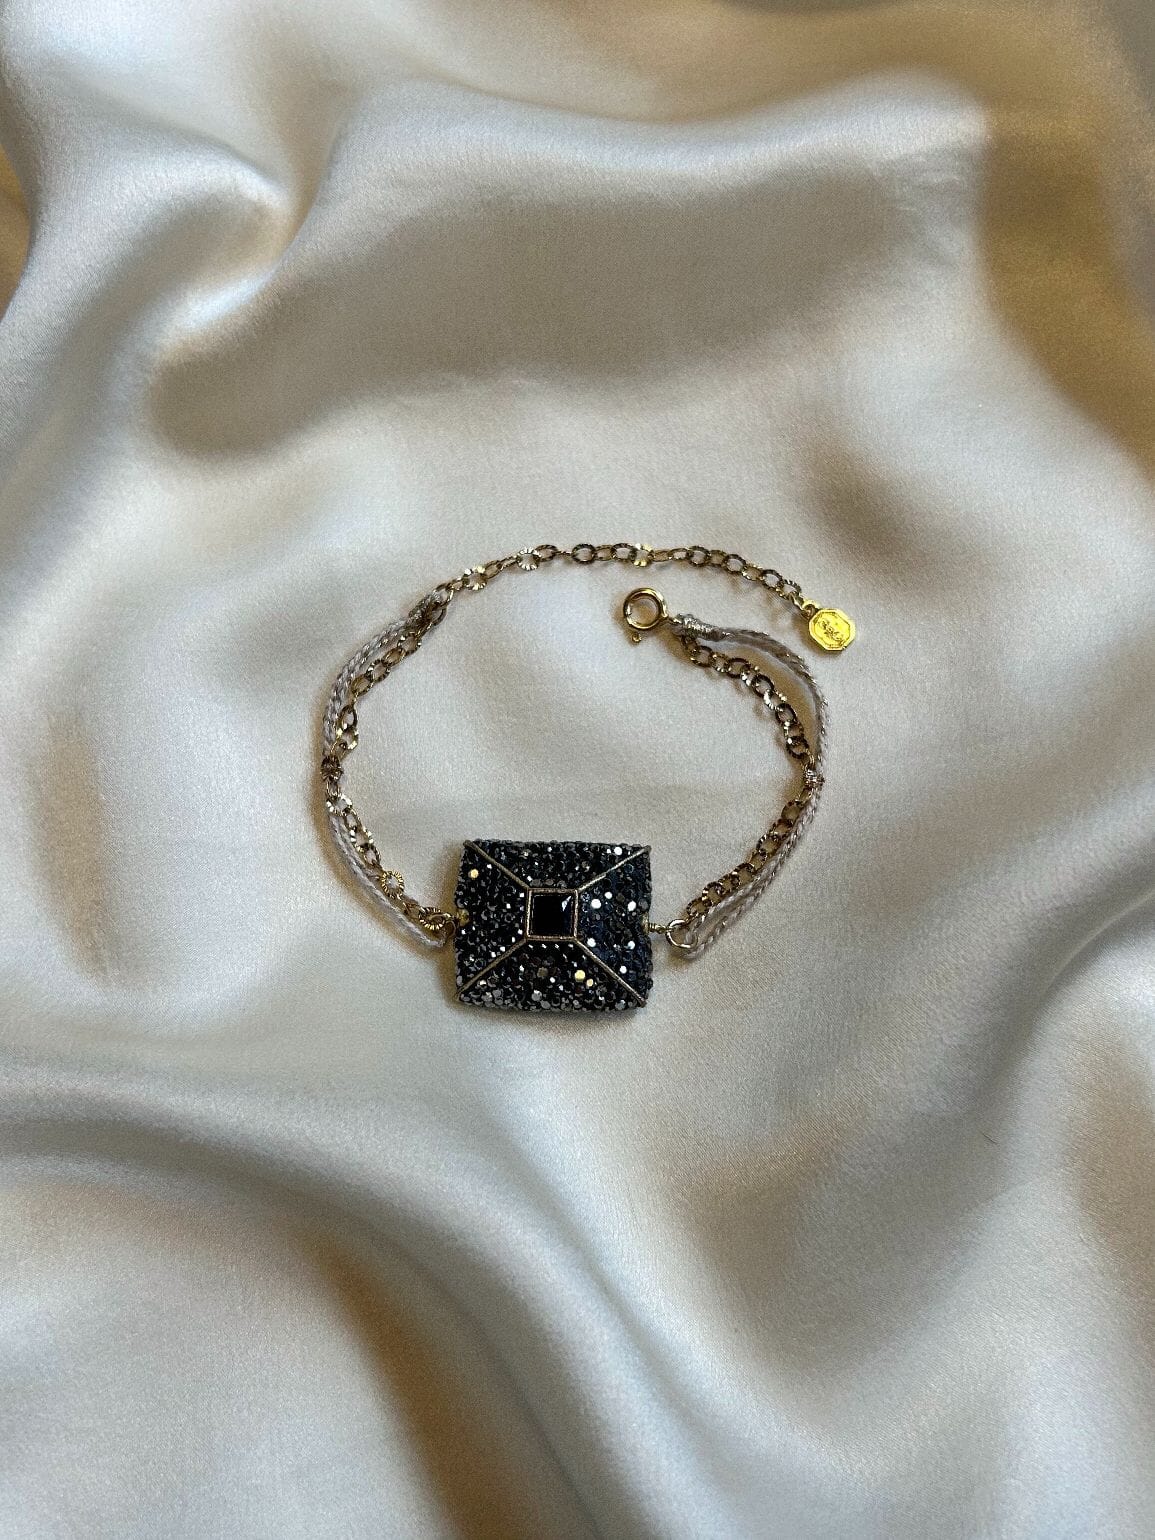 #bracelet #chic #pierre #perles #gold #bijoux #black #shine #glamour #jelwery #jewellery #woman #sexy 